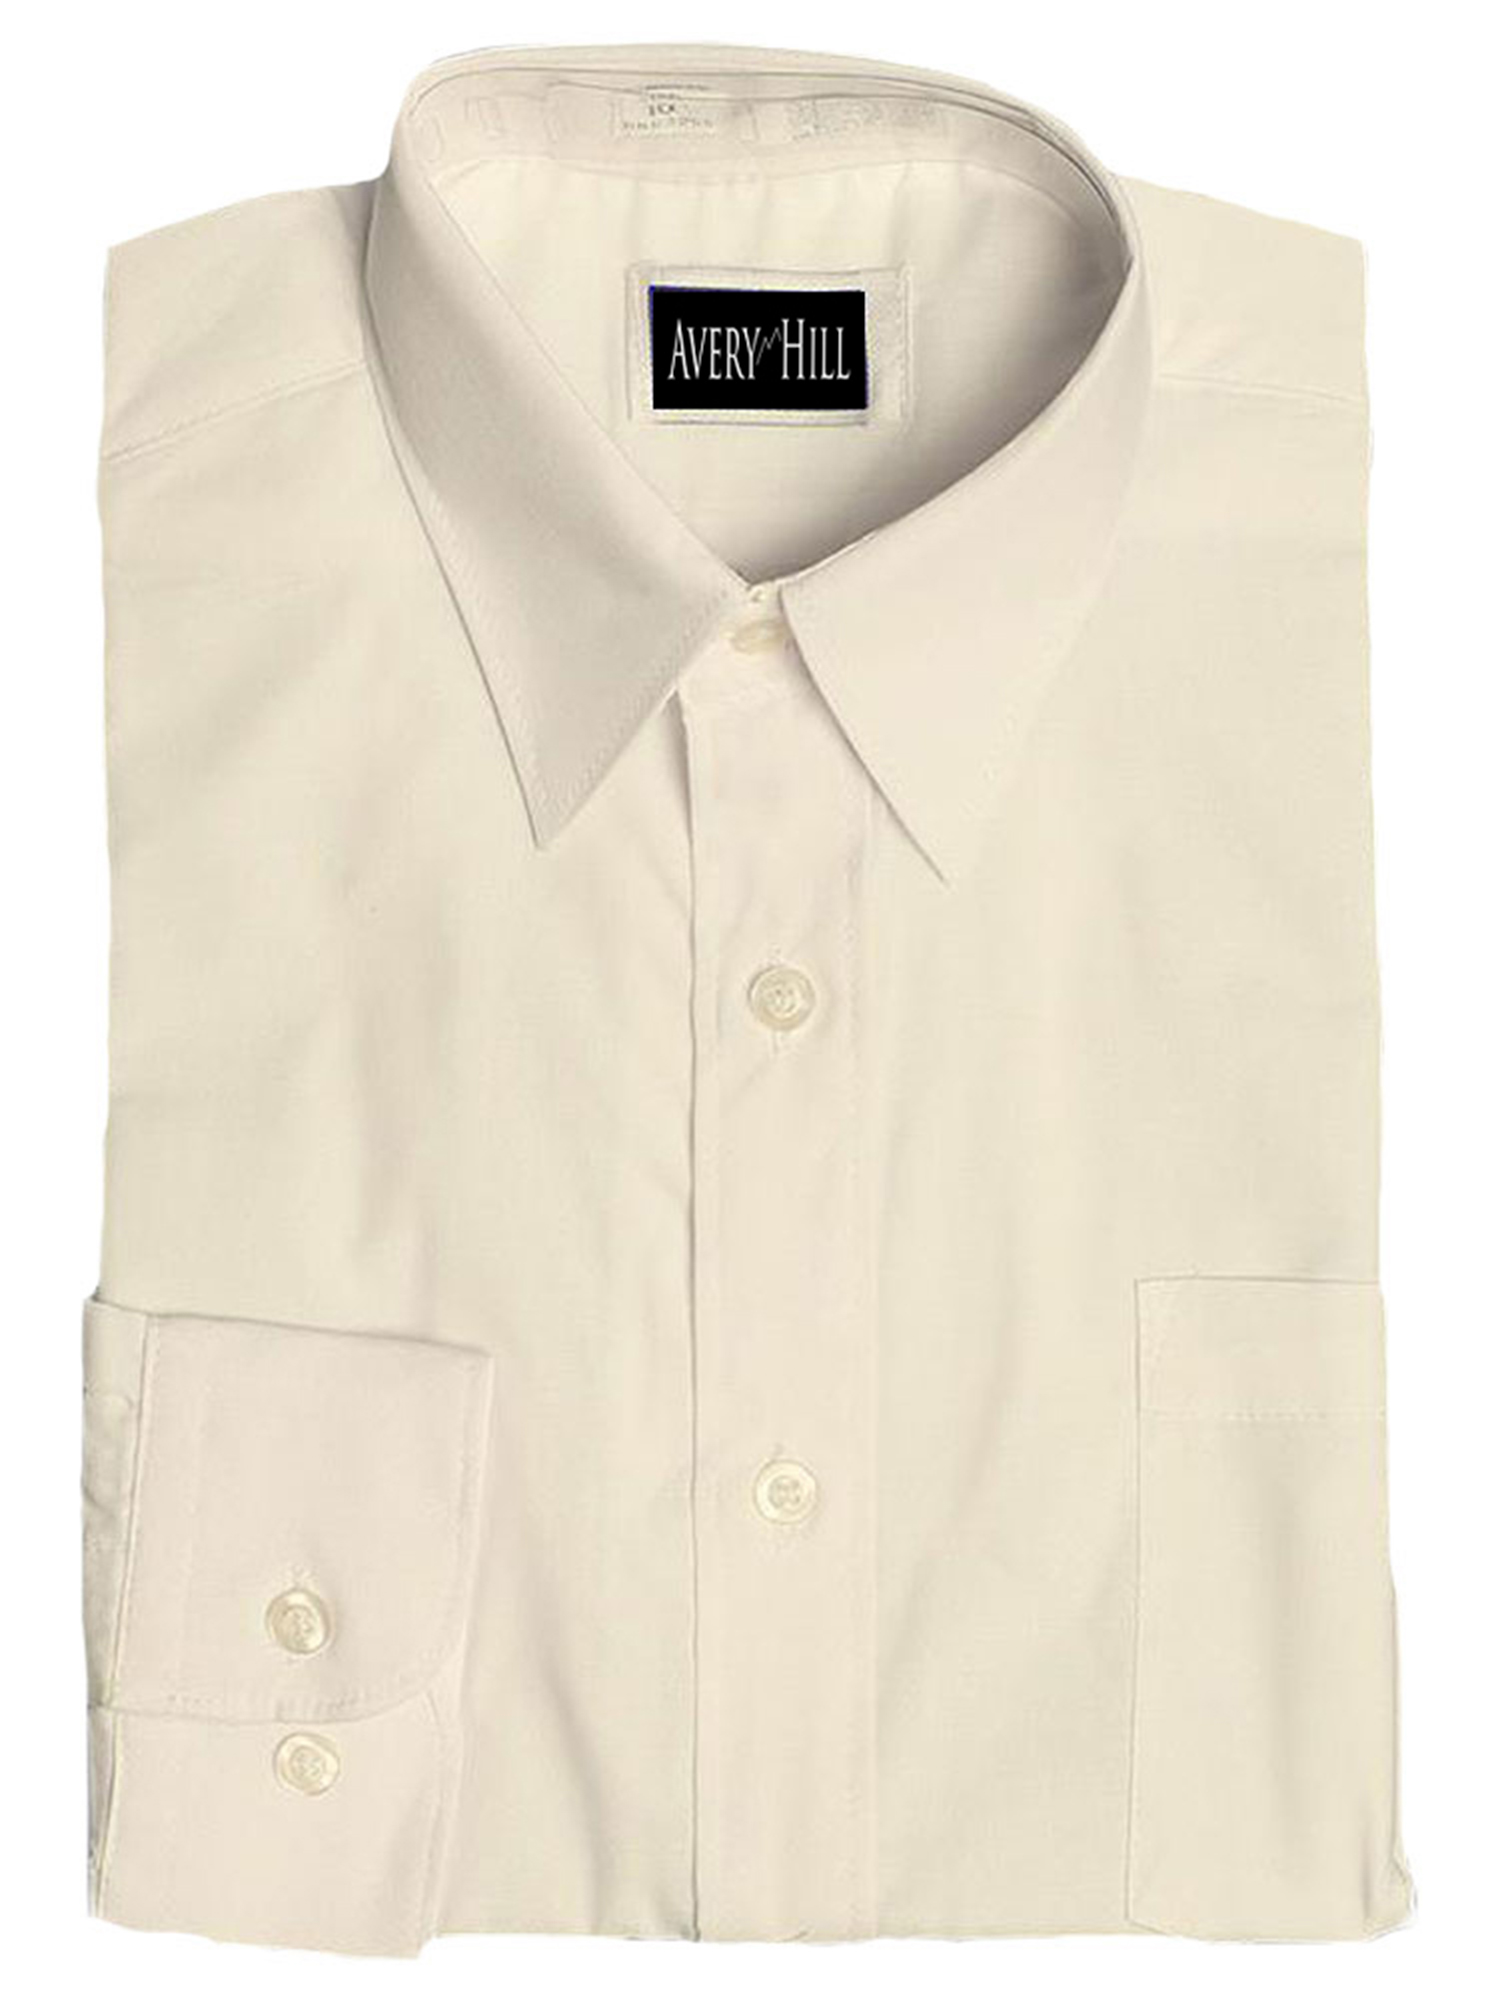 Boys White or Ivory Long Sleeve Wrinkle Resistant Dress Shirt IV 10